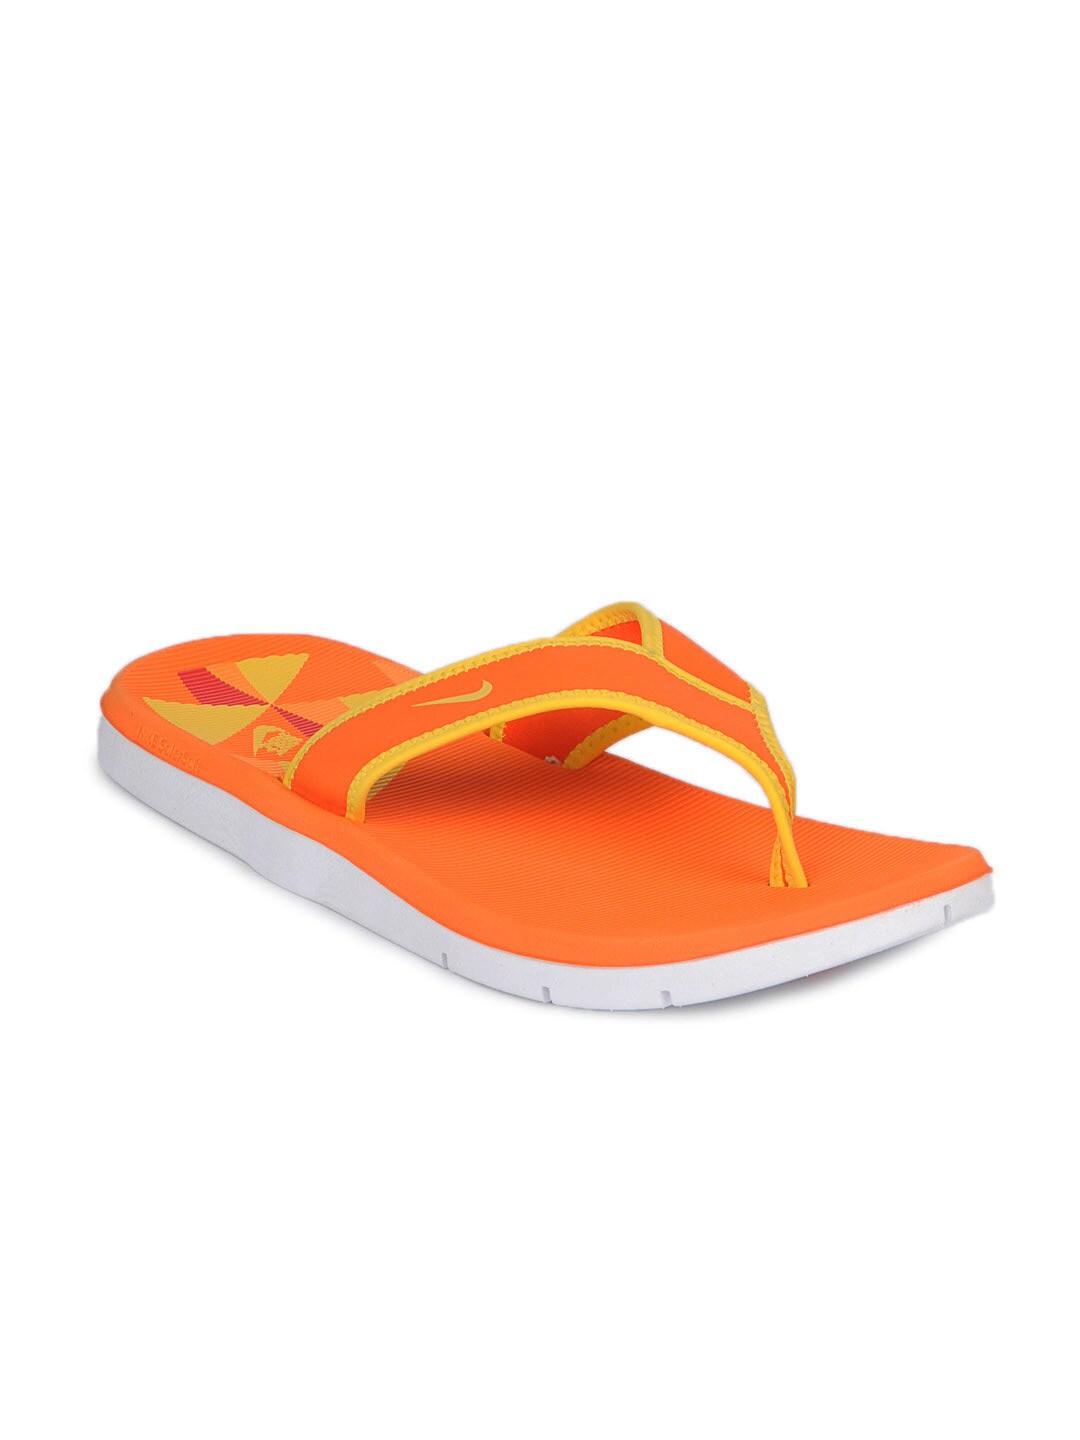 Nike Men Celso Solarsoft Thong Orange Flip Flops